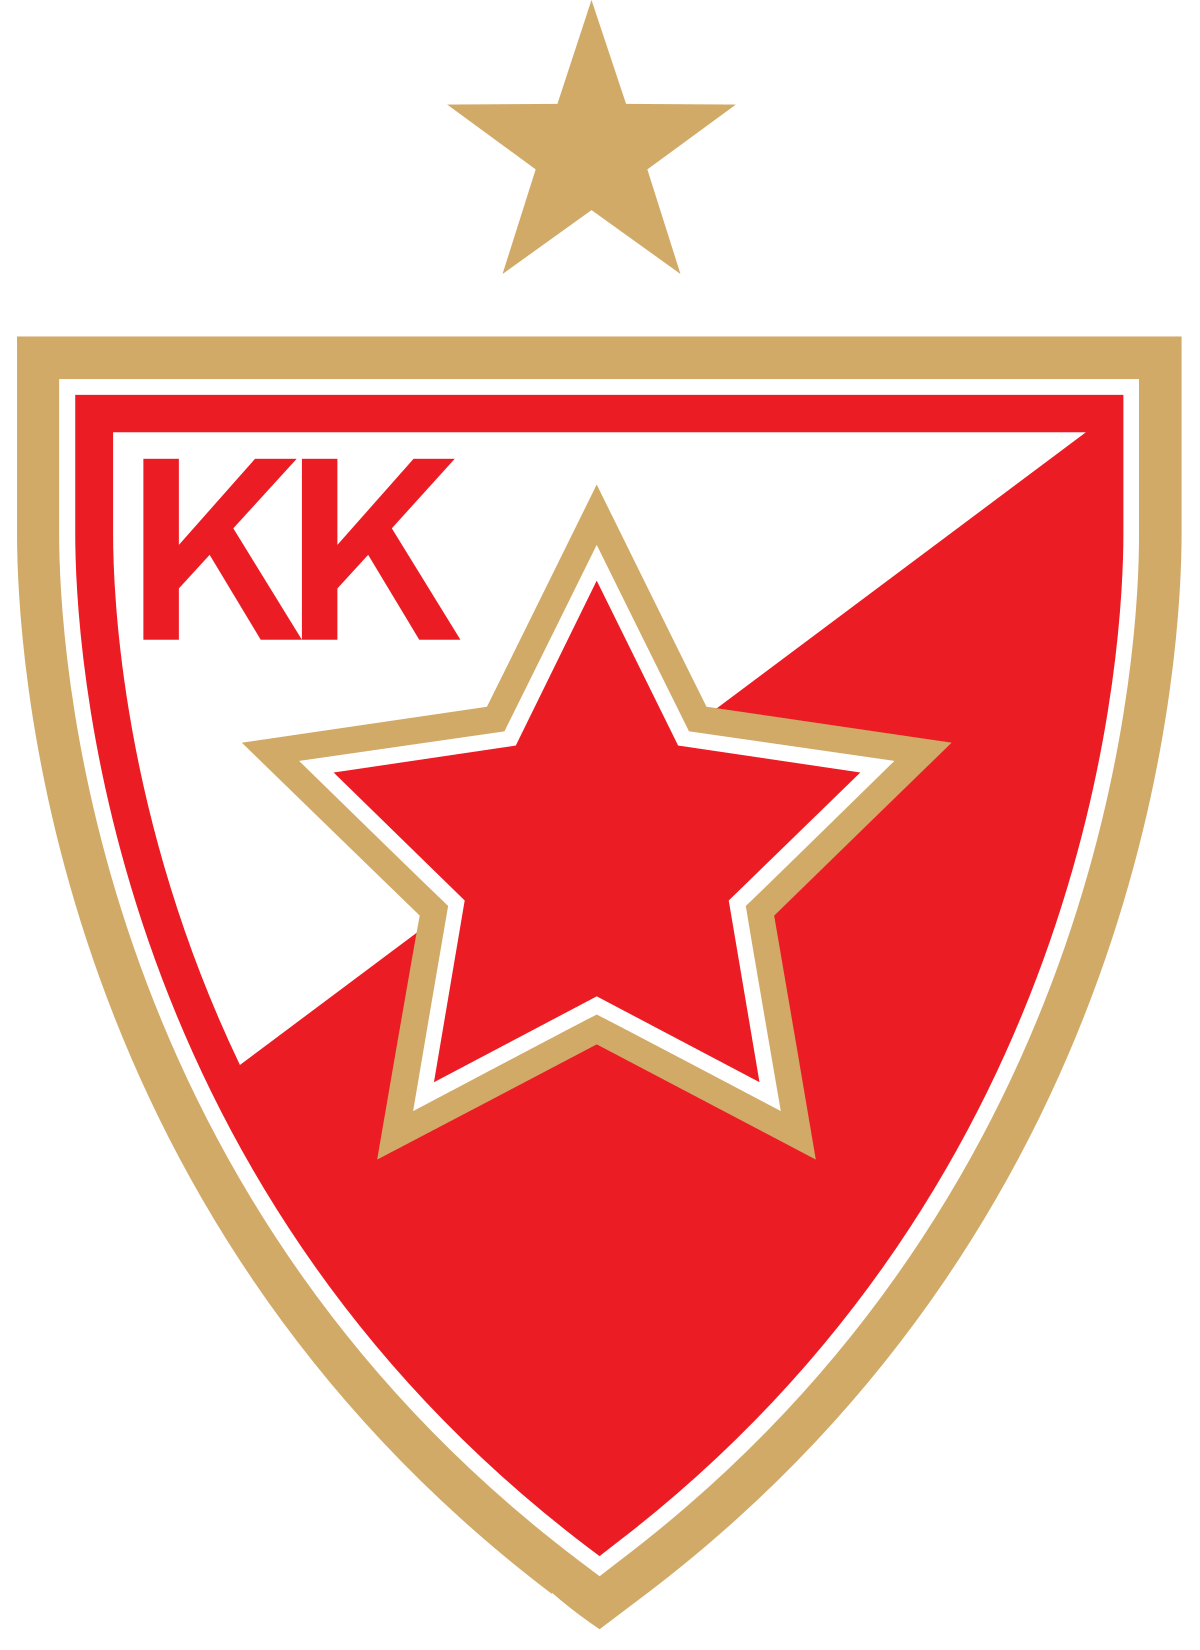 Red and White Basketball Logo - KK Crvena zvezda